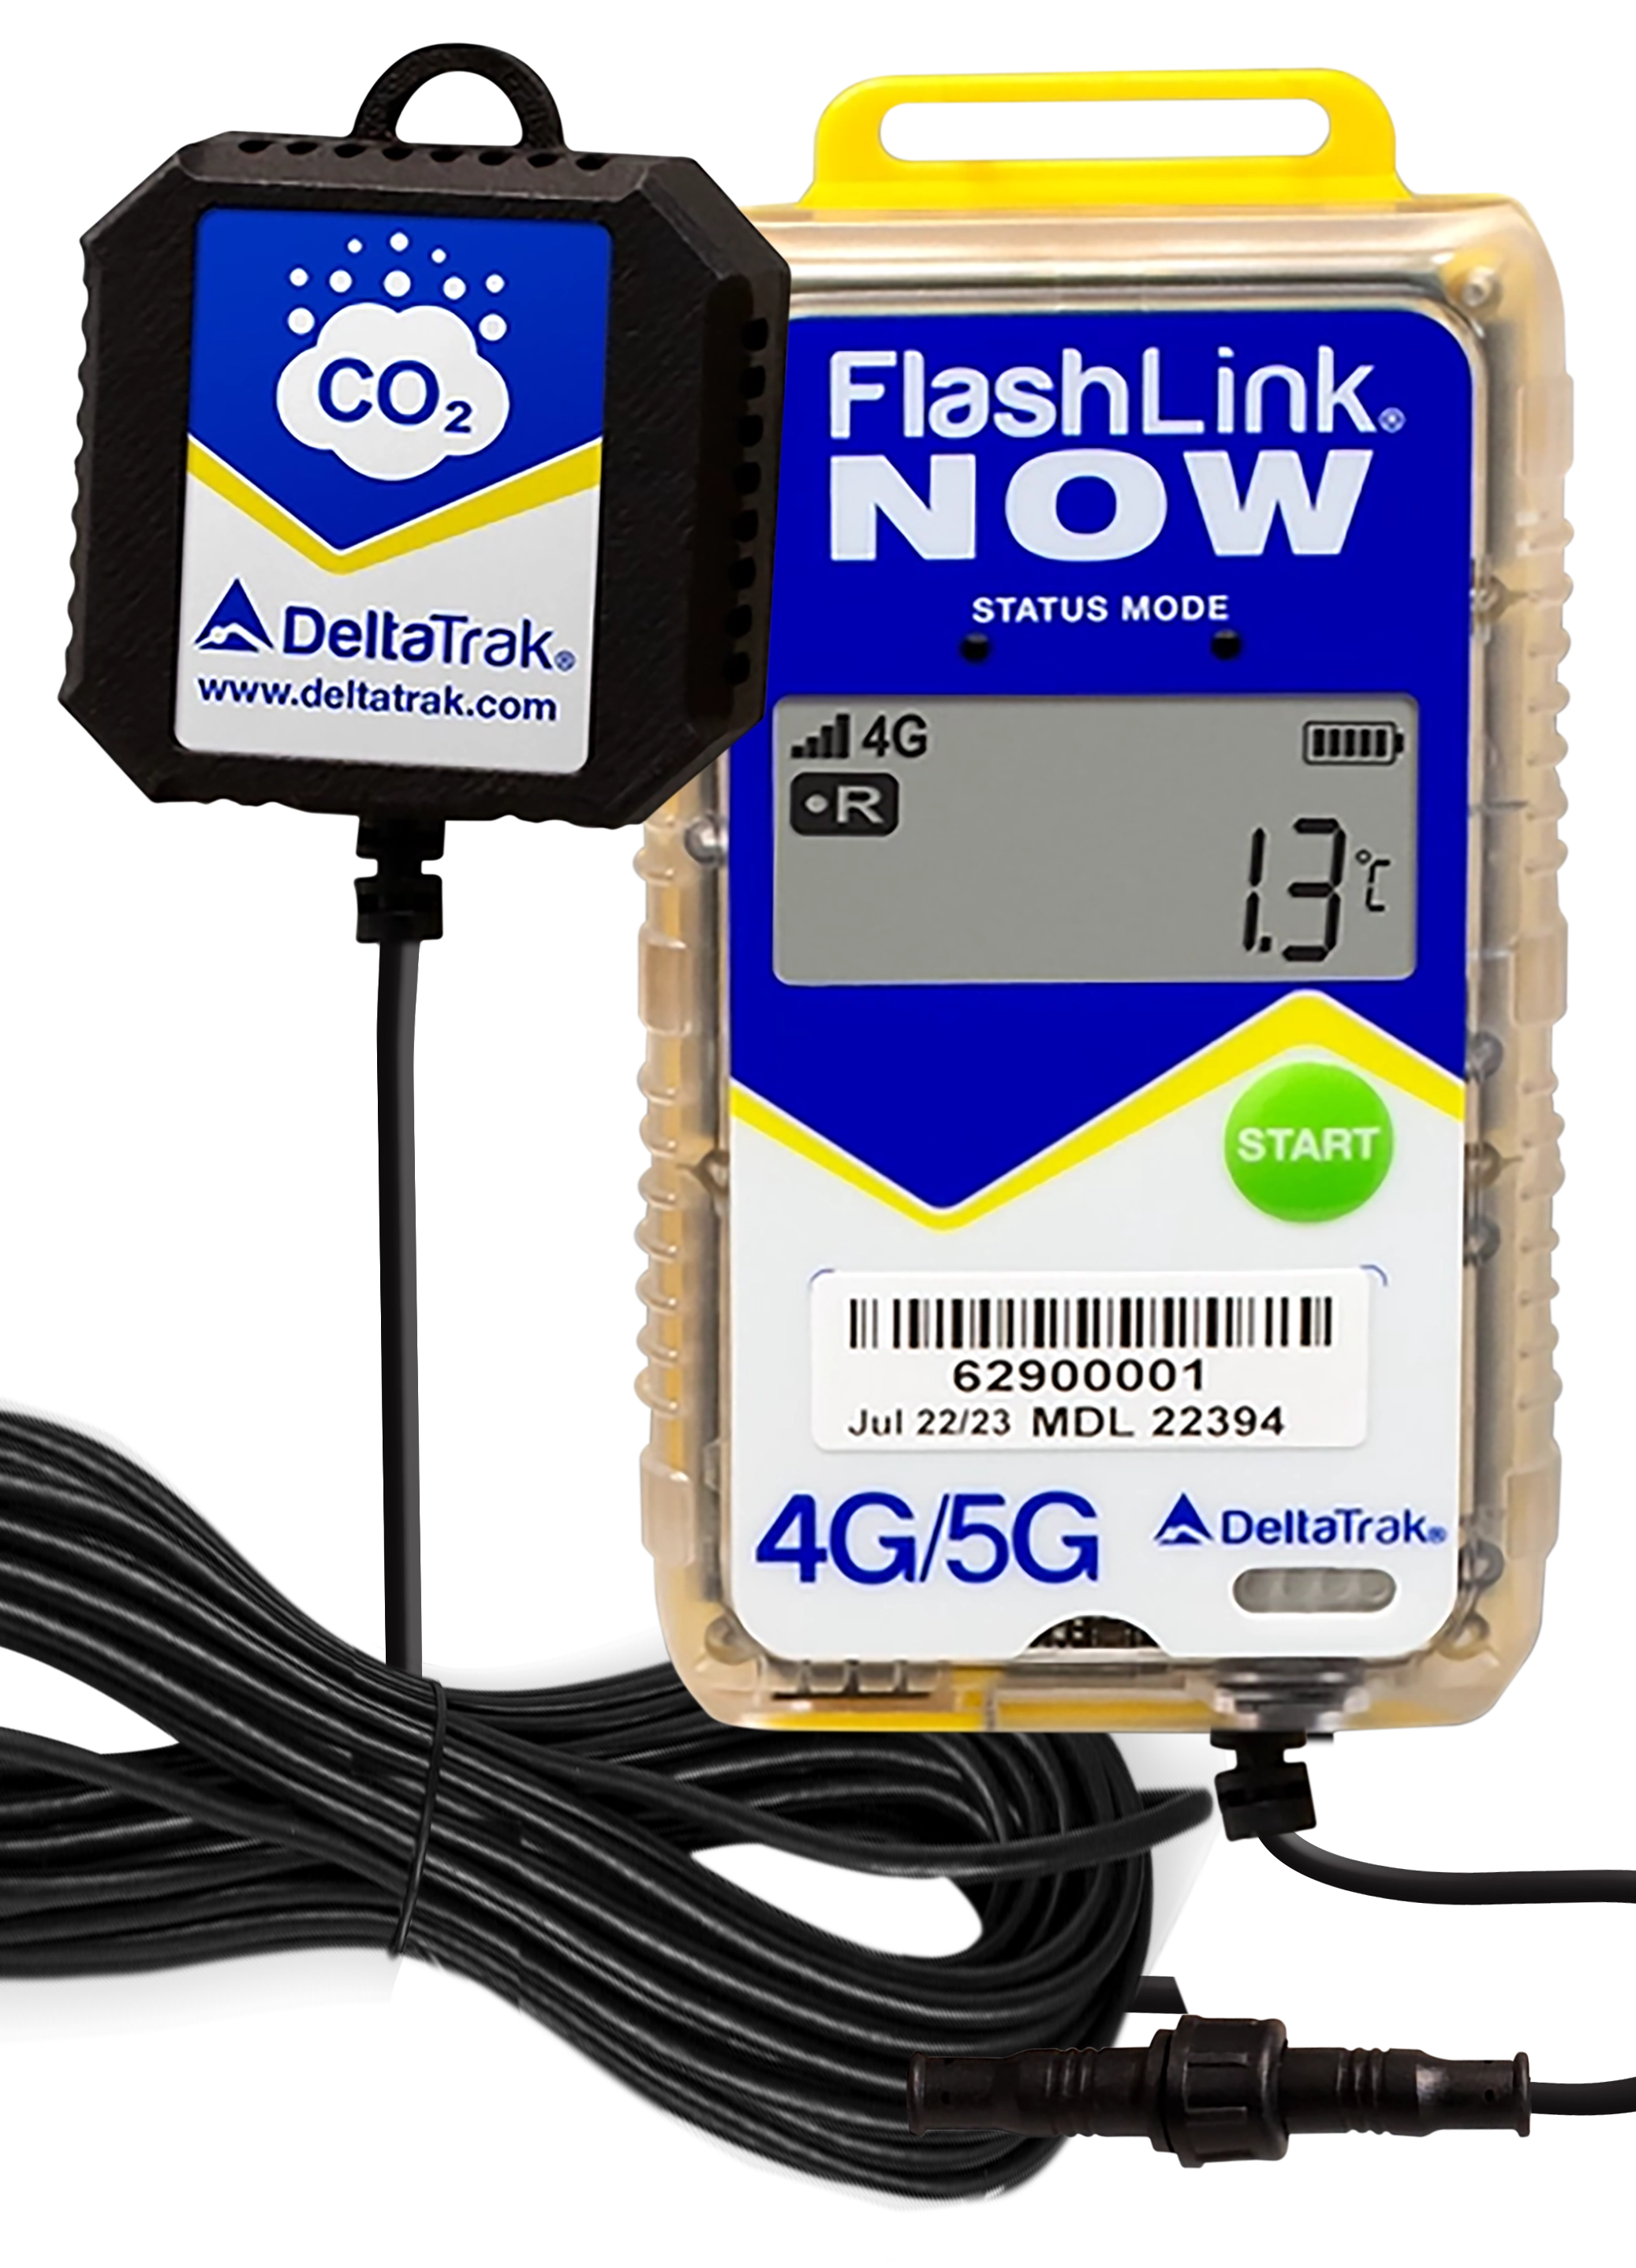 FlashLink® NOW CO2 4G/5G Real-Time In-Transit Logger, Model 22394